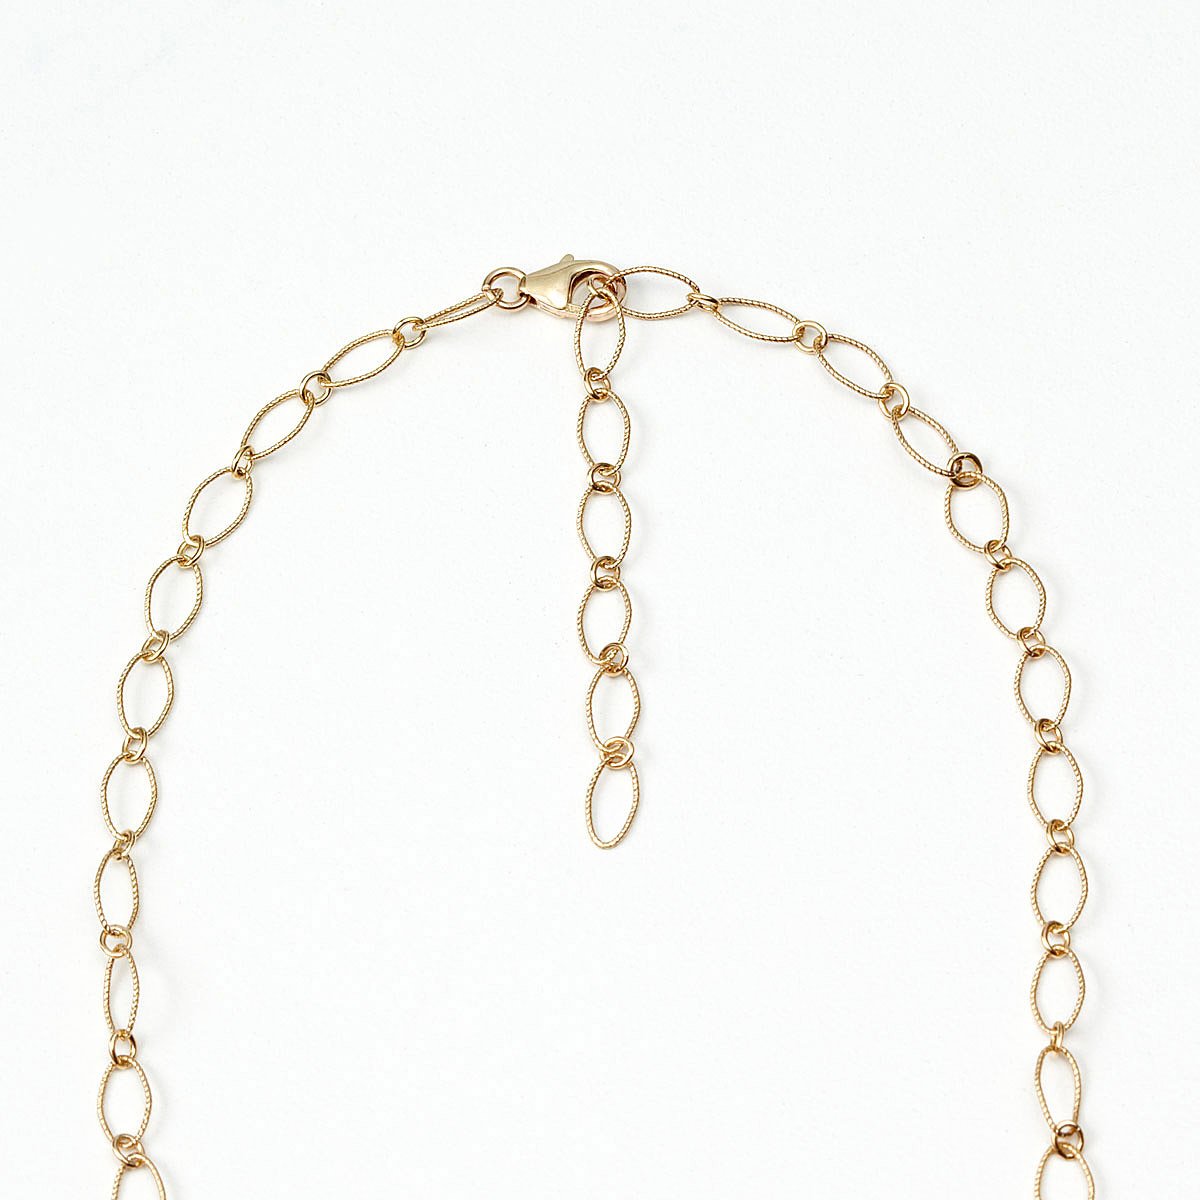 Blue Pinecone Necklace | Handmade Nature-Inspired Jewelry | UncommonGoods